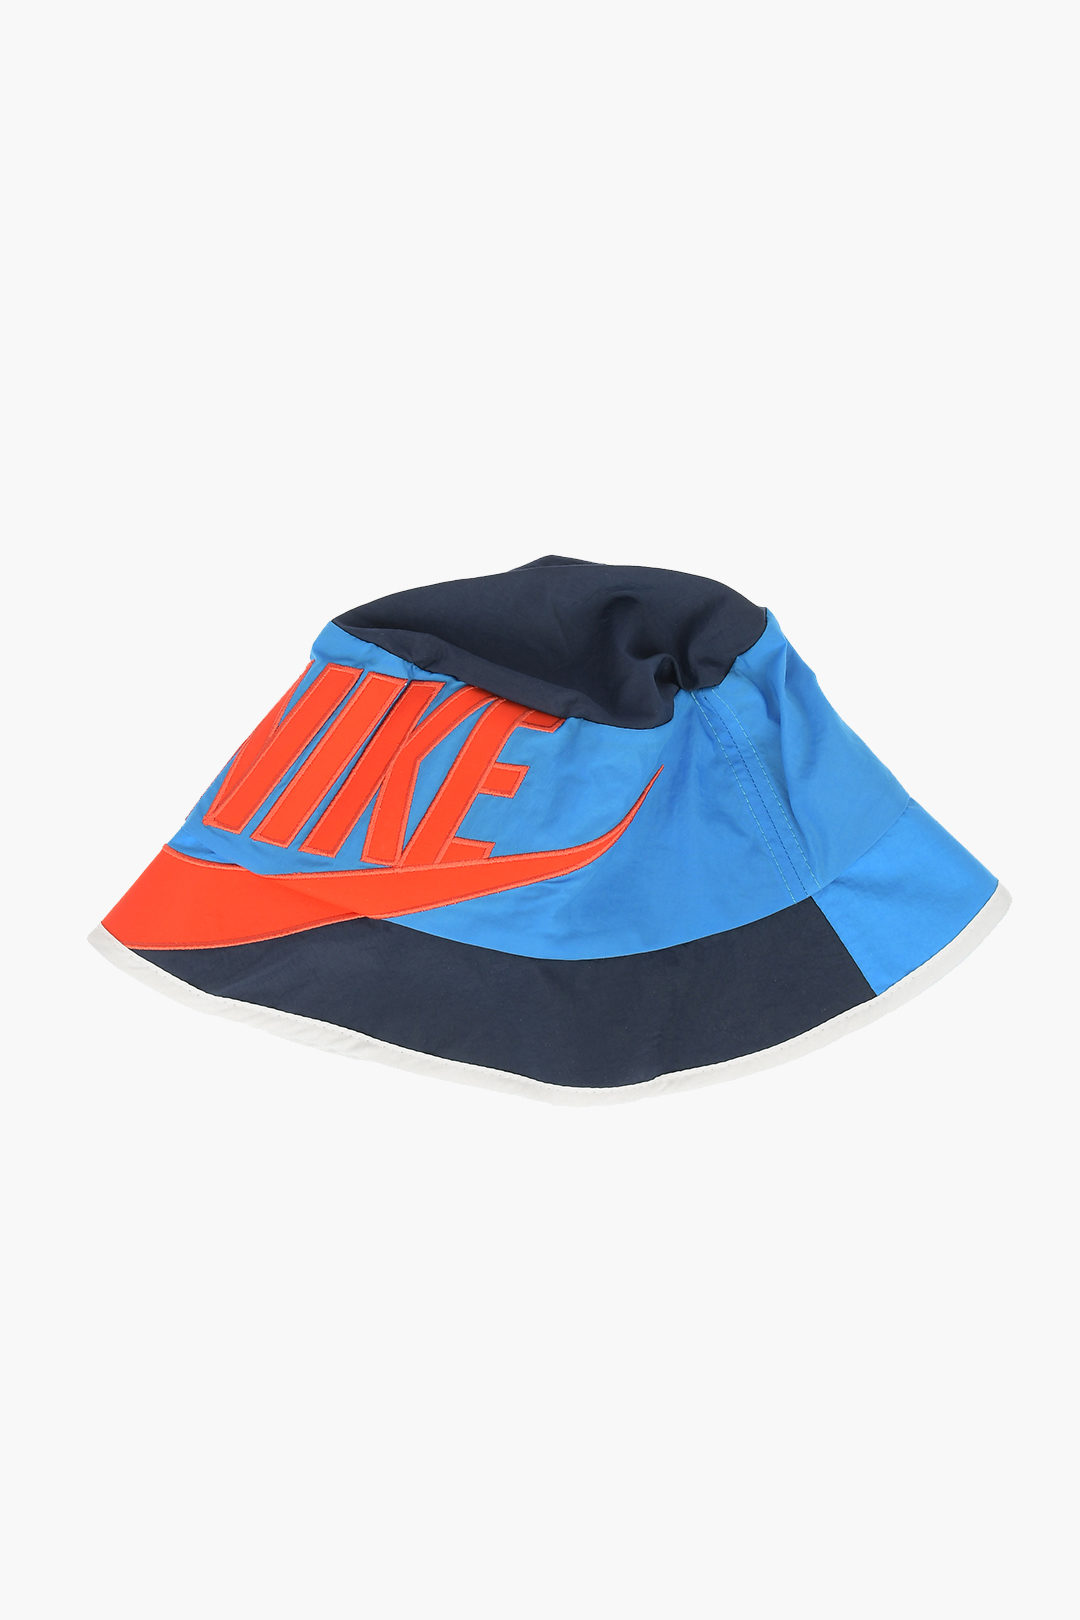 Nike Nylon fishing Hat men - Glamood Outlet